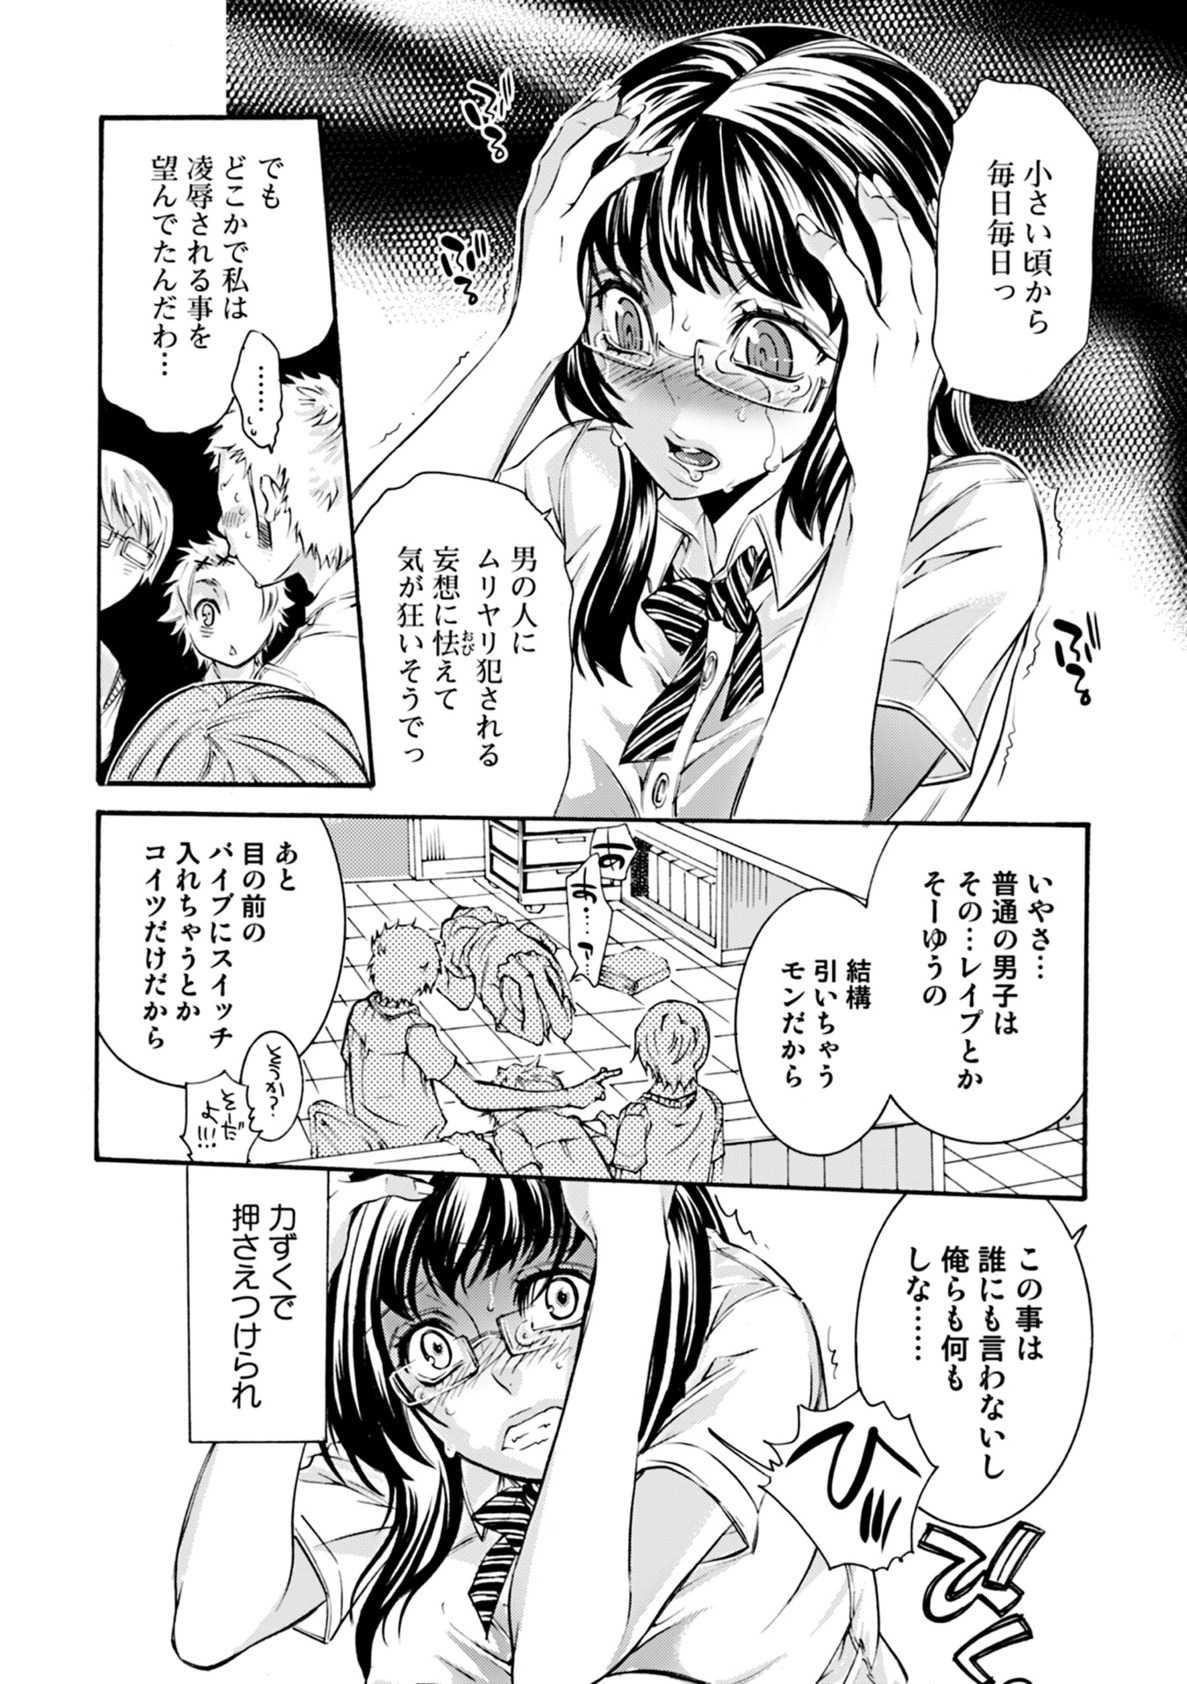 Mitsu no Hana - Flower of Honey 37